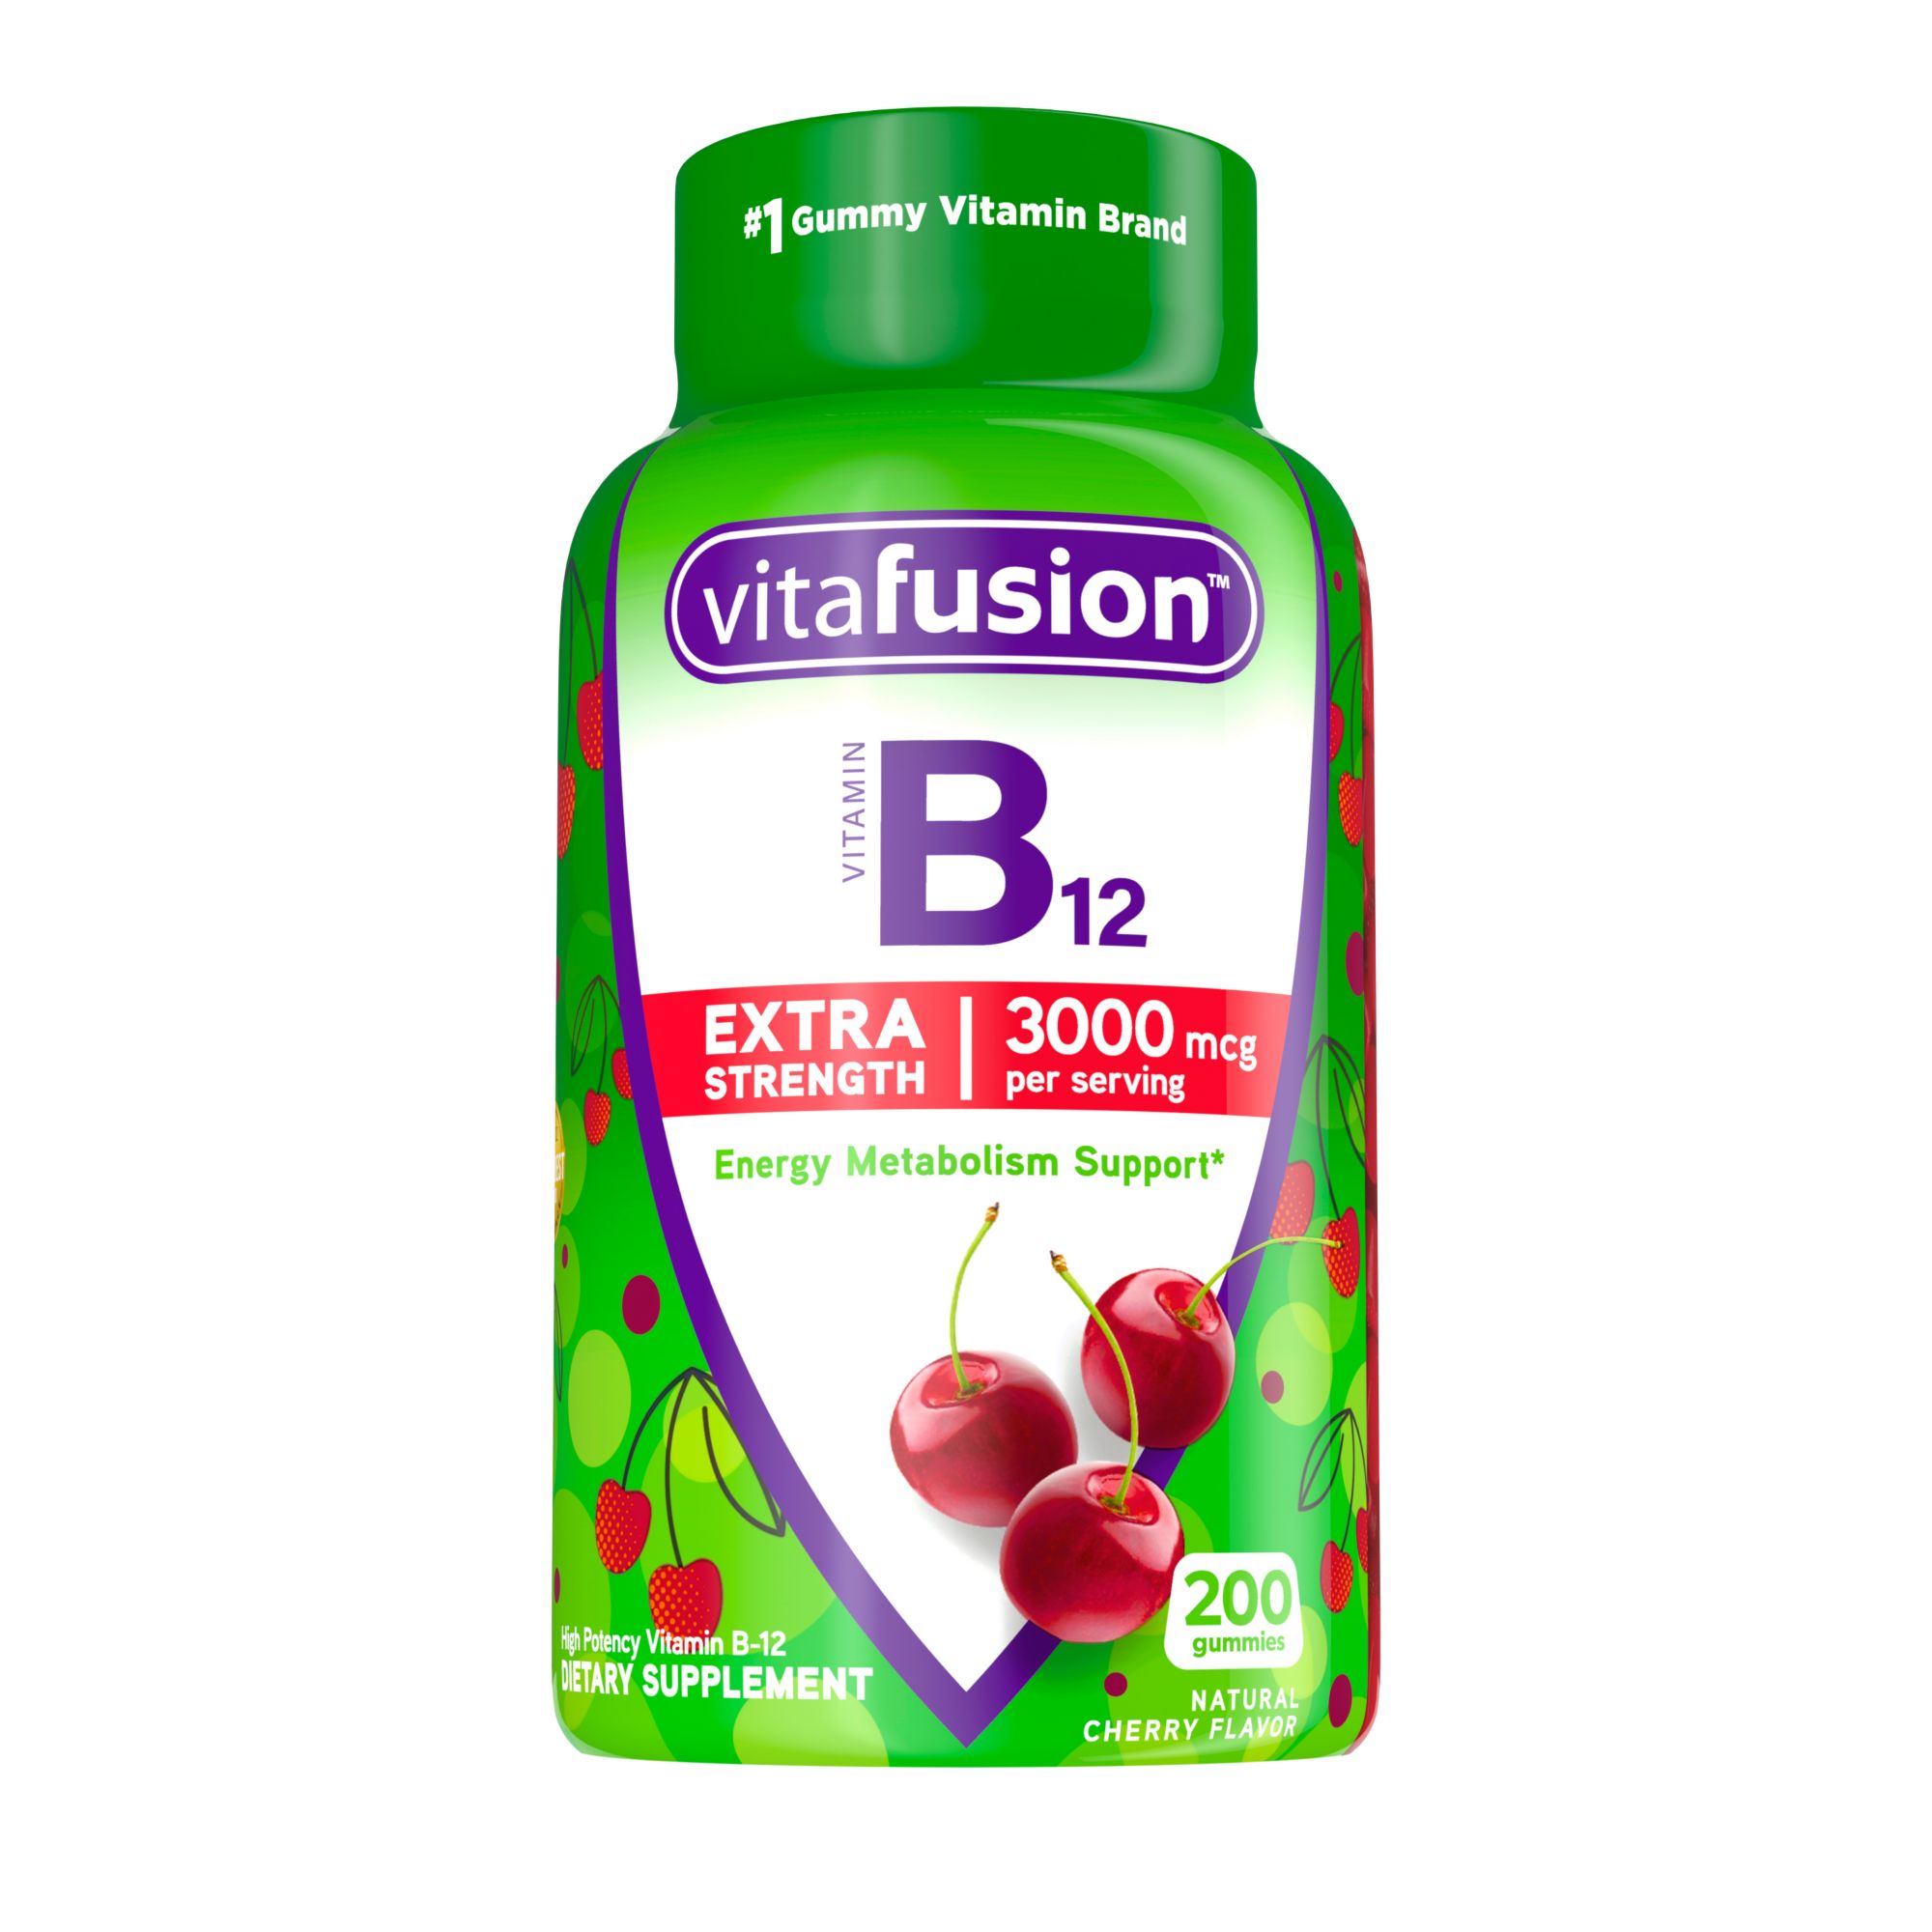 Vitafusion Extra-Strength B12 Gummies, 200 ct.